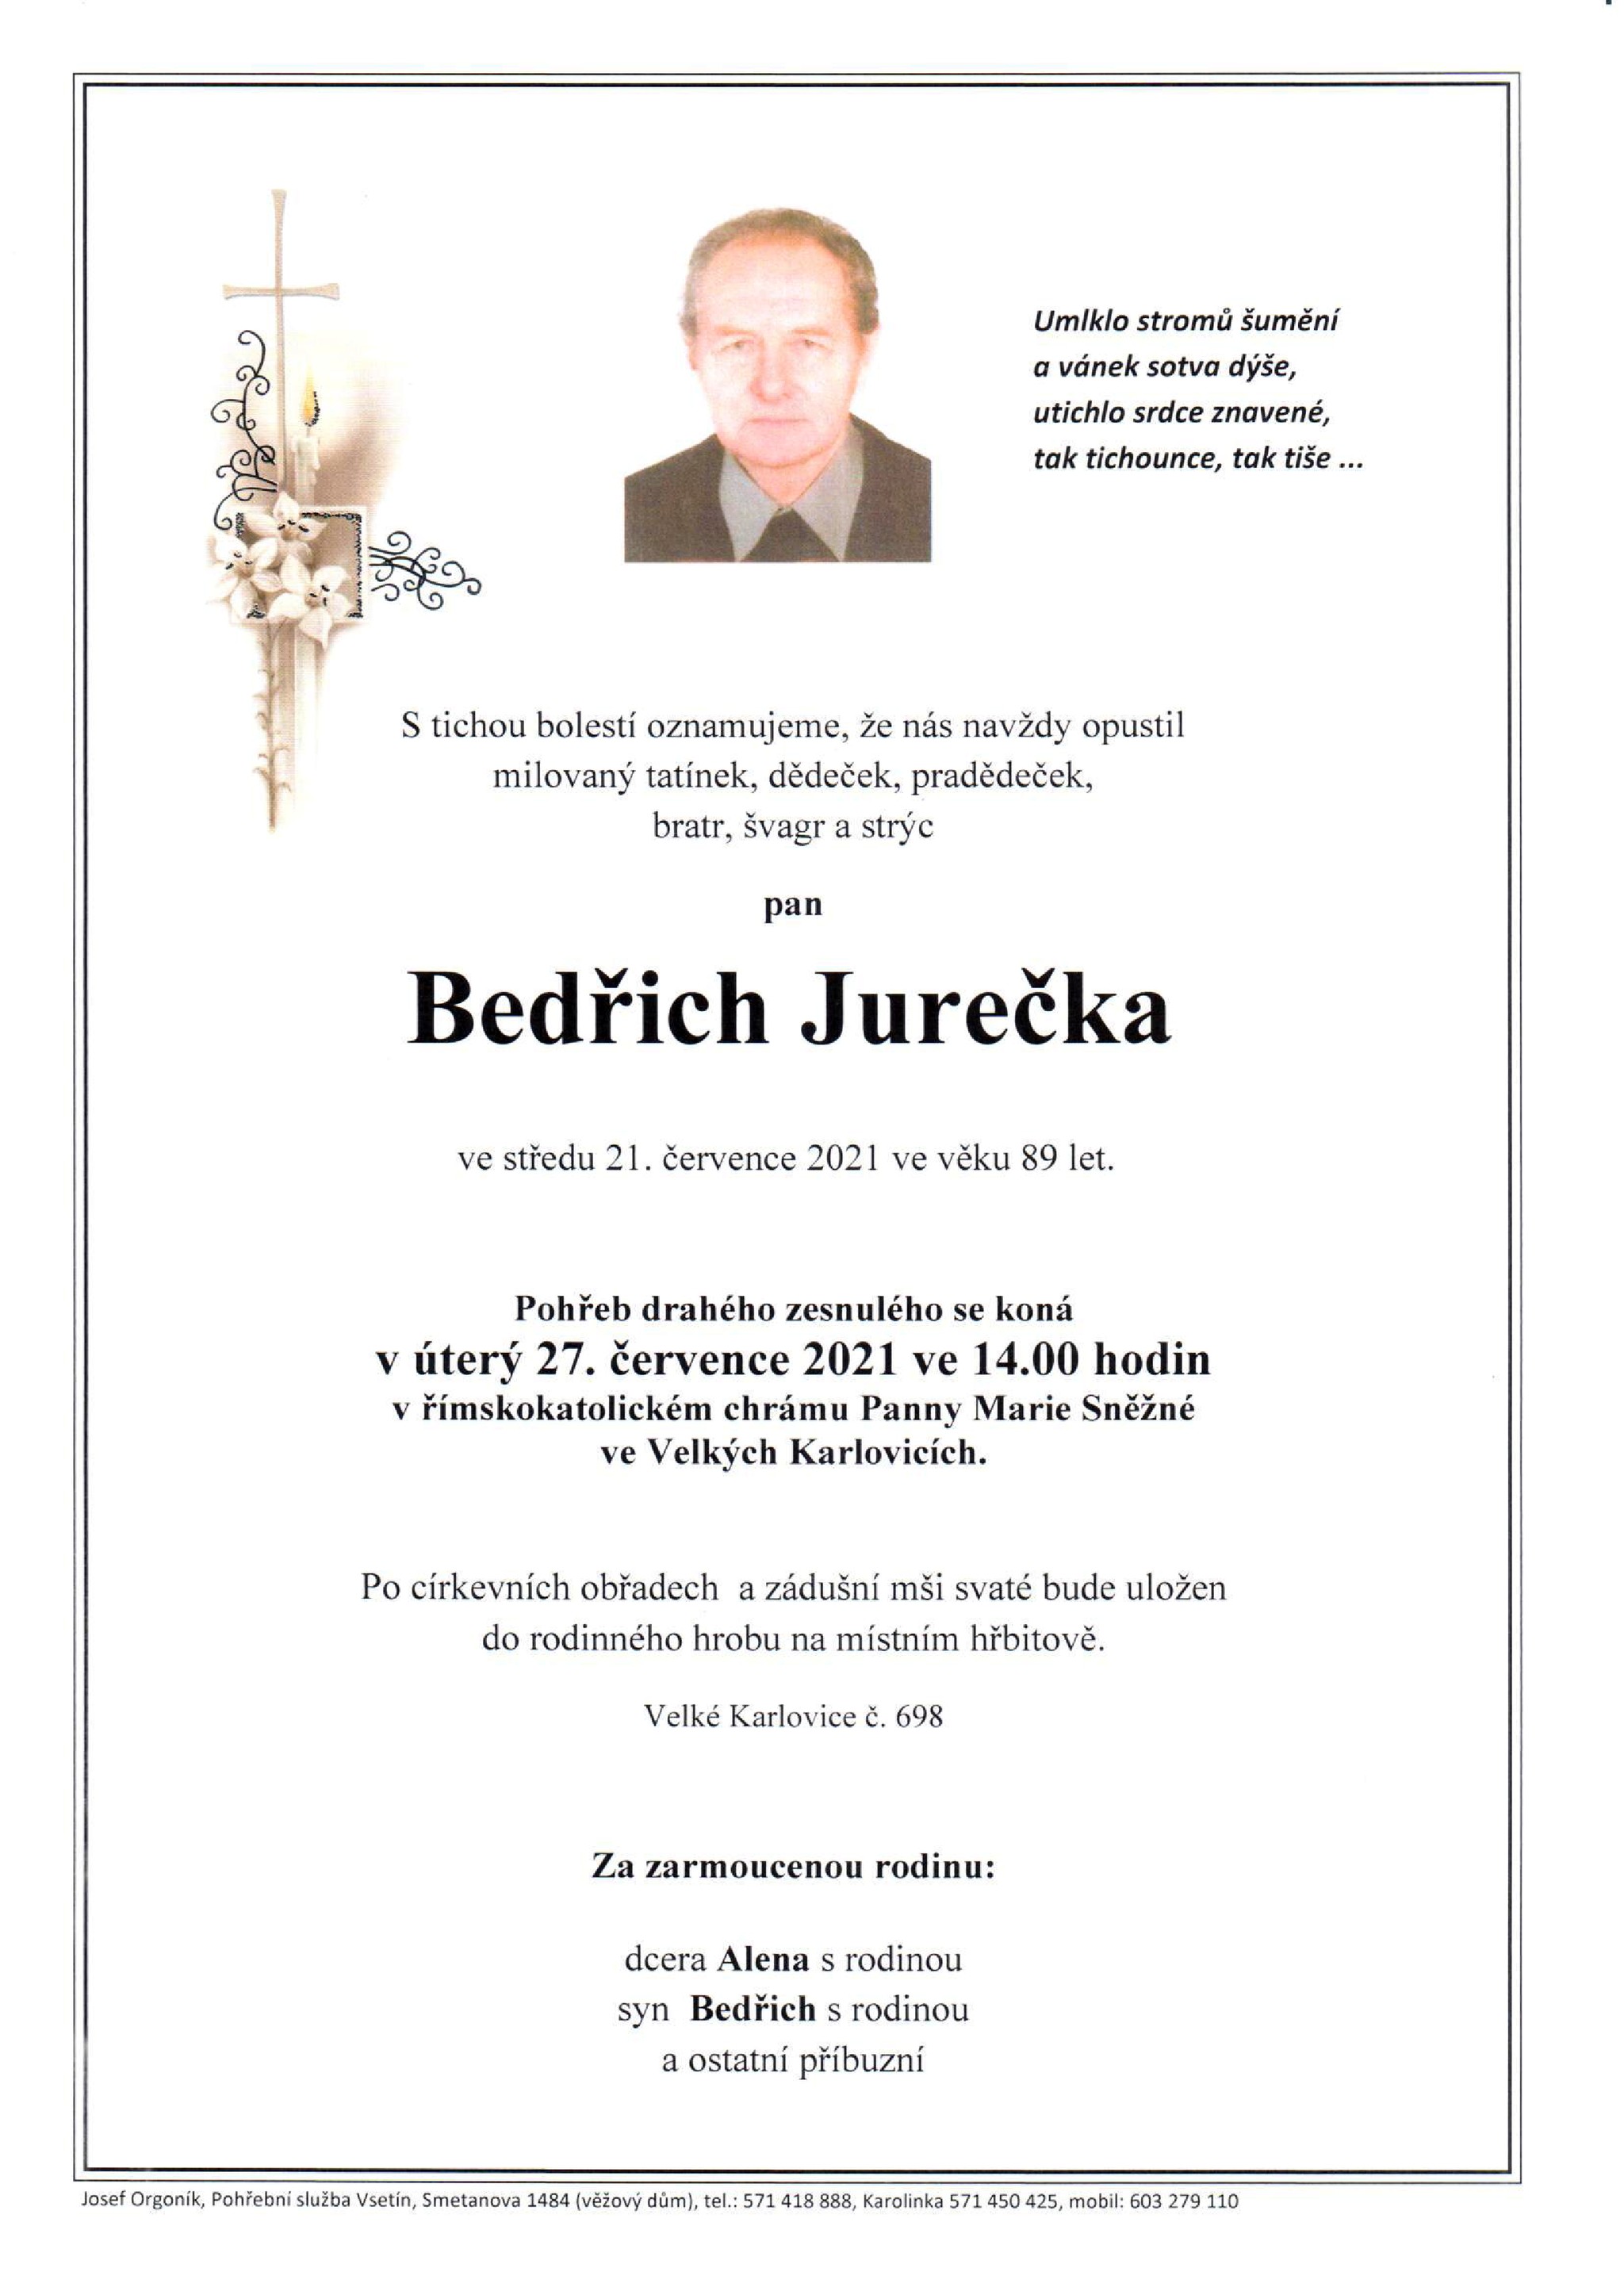 Bedřich Jurečka